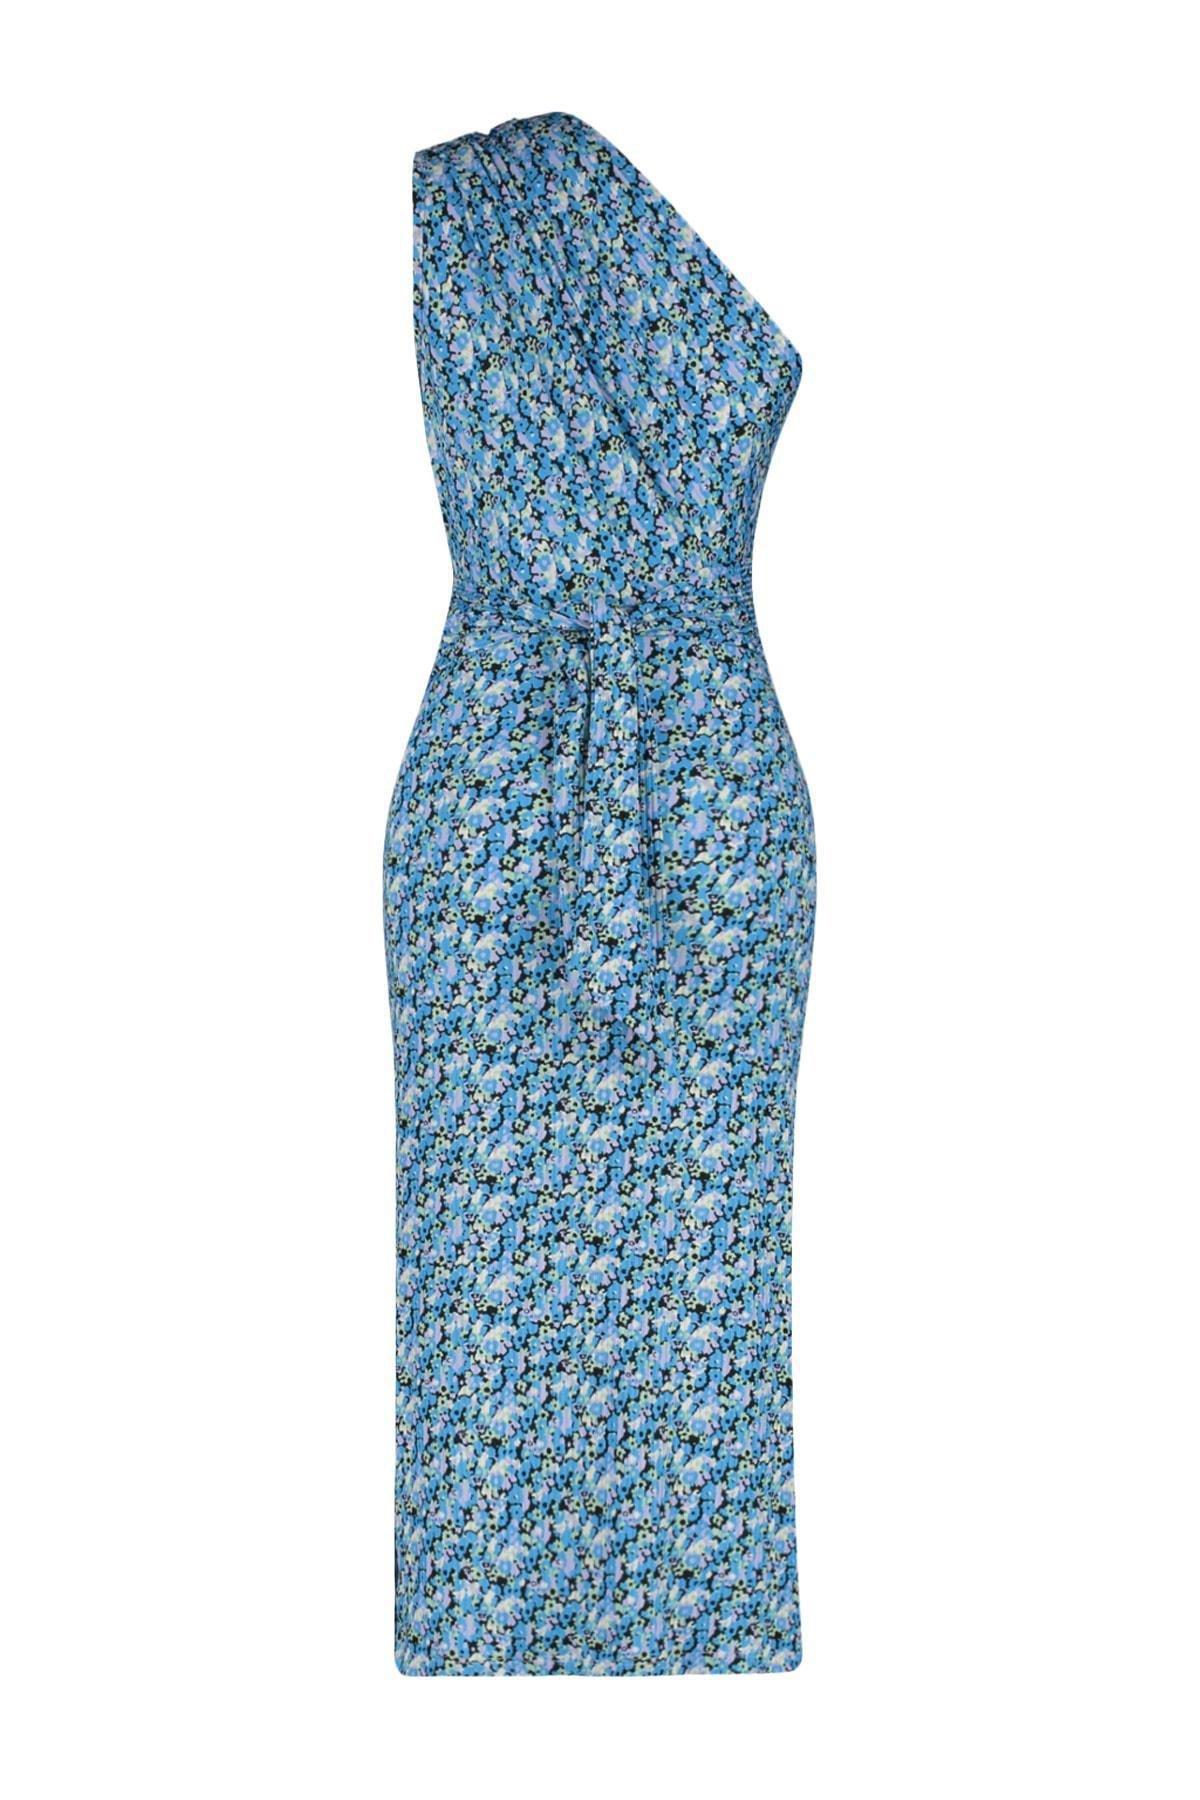 Trendyol - Blue Floral Bodycon Dress